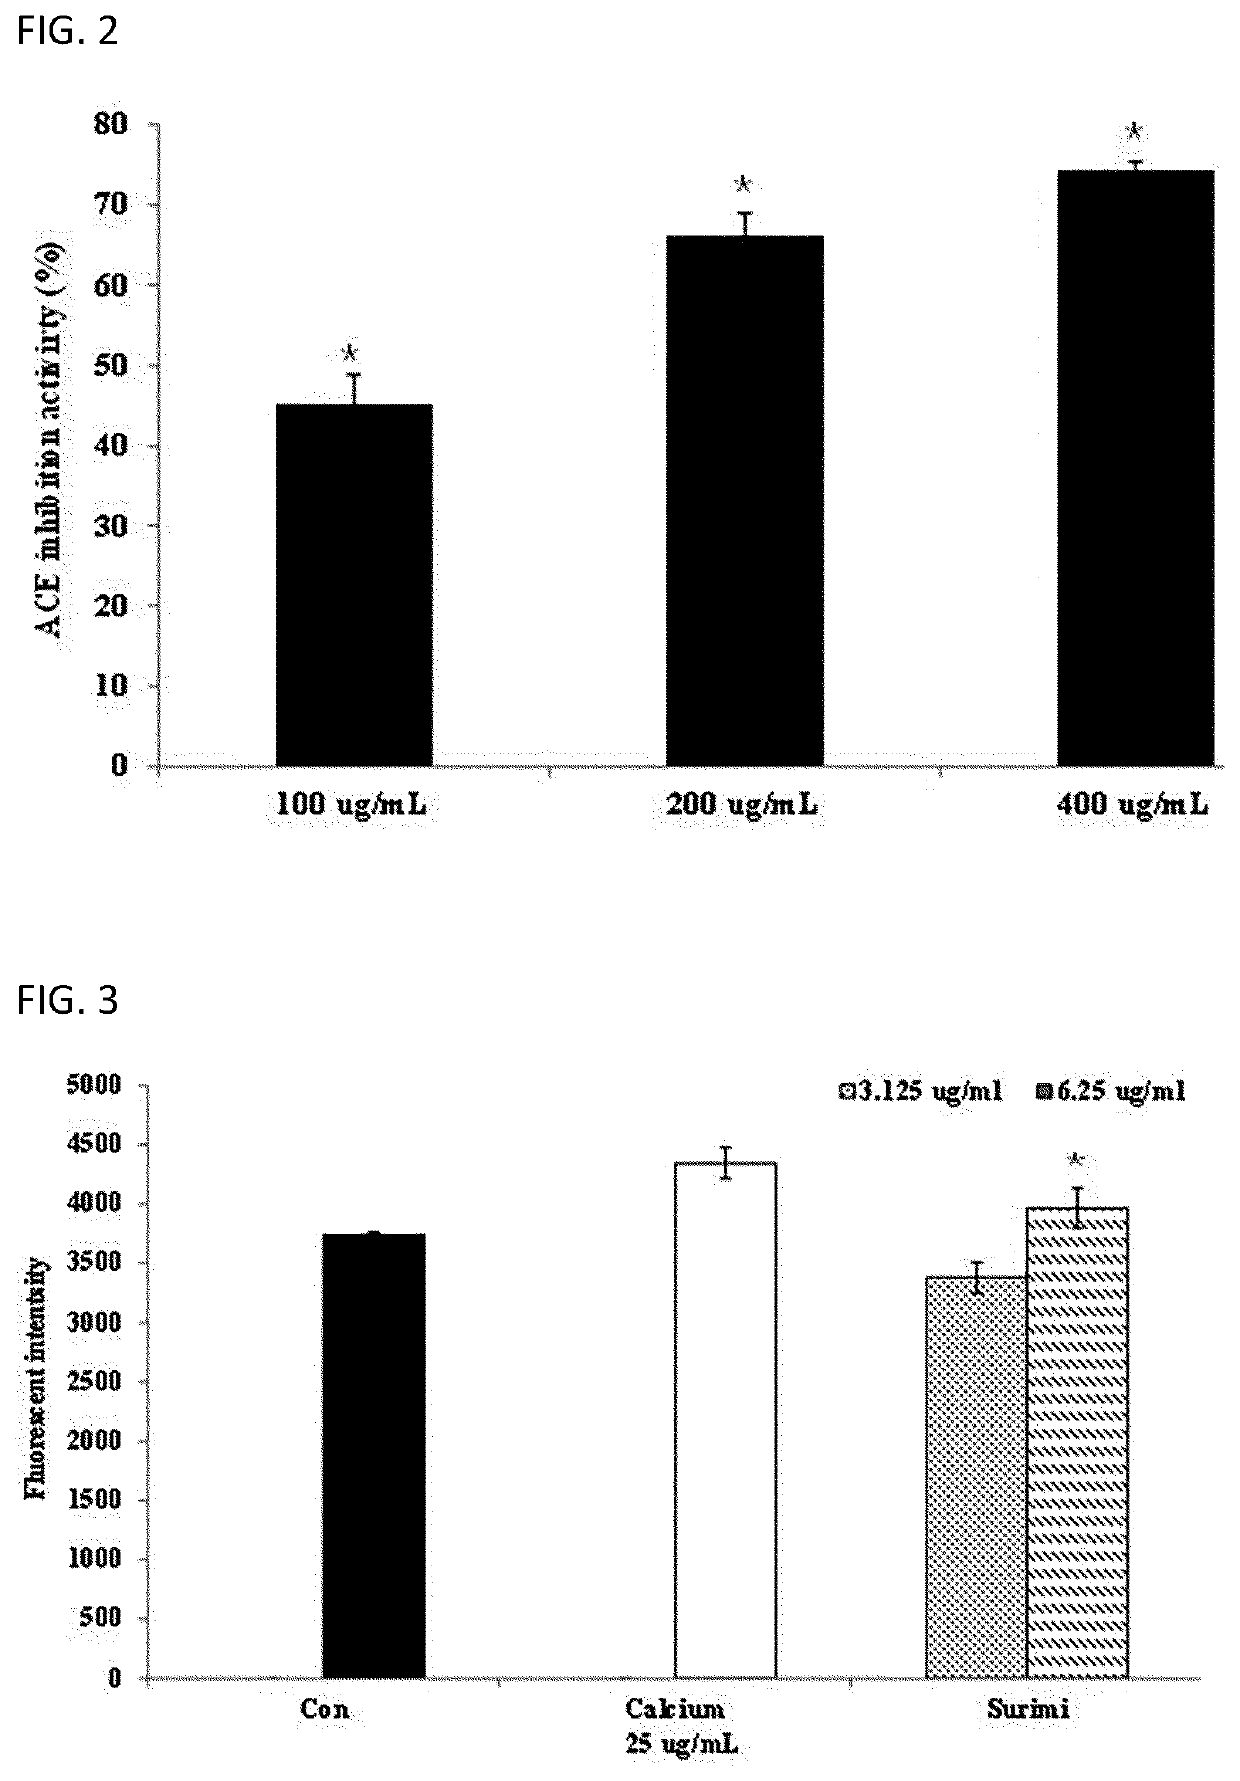 Flounder surimi having antioxidant and antihypertensive effects and method of preparing the same